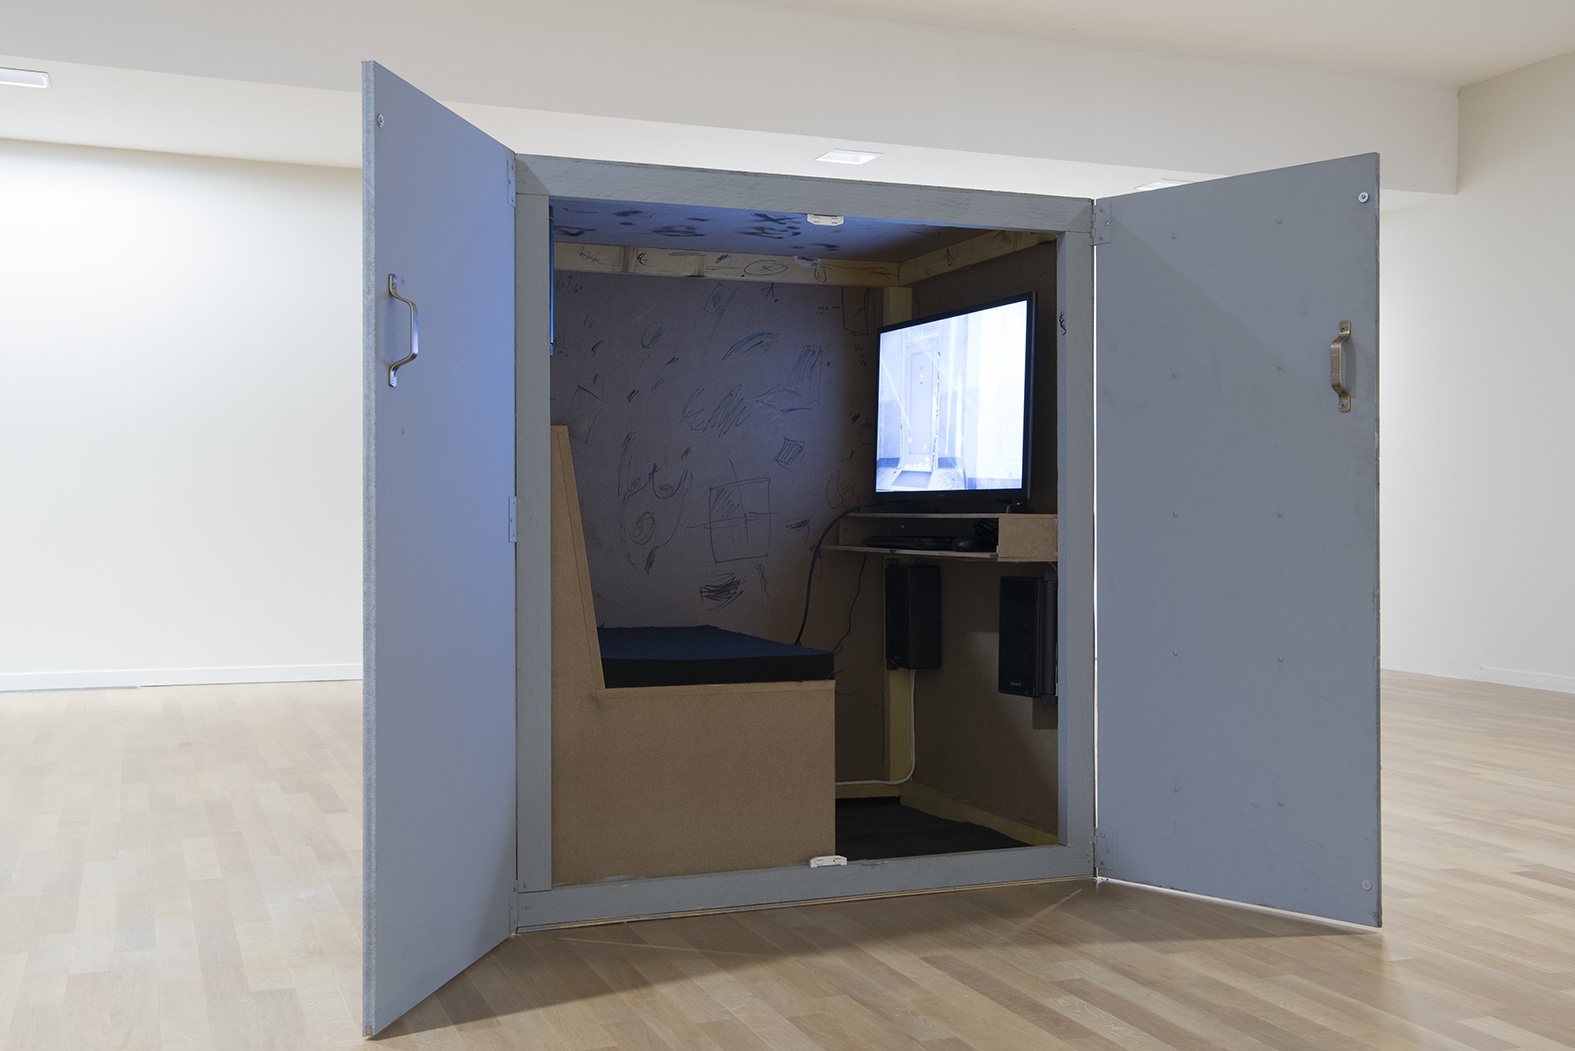 Jon Rafman, installation view, Les Abattoirs, Toulouse